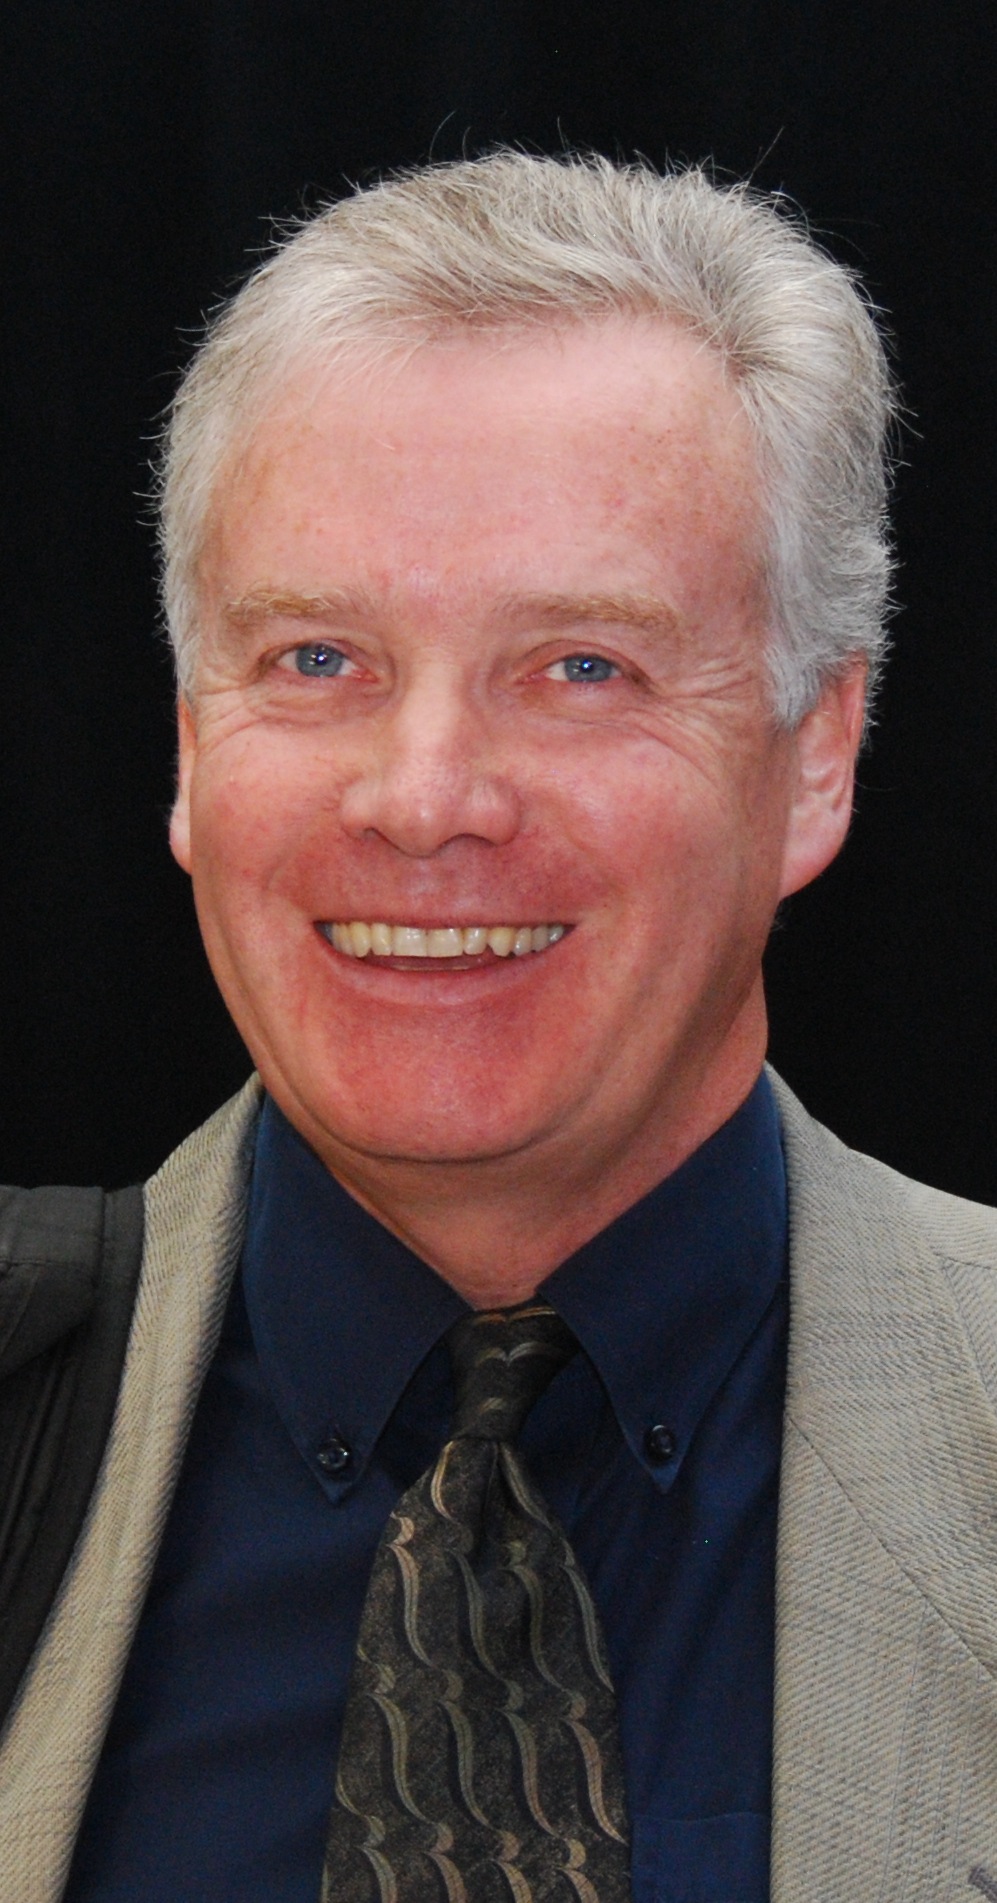 Edmonton Journal political columnist Graham Thomson